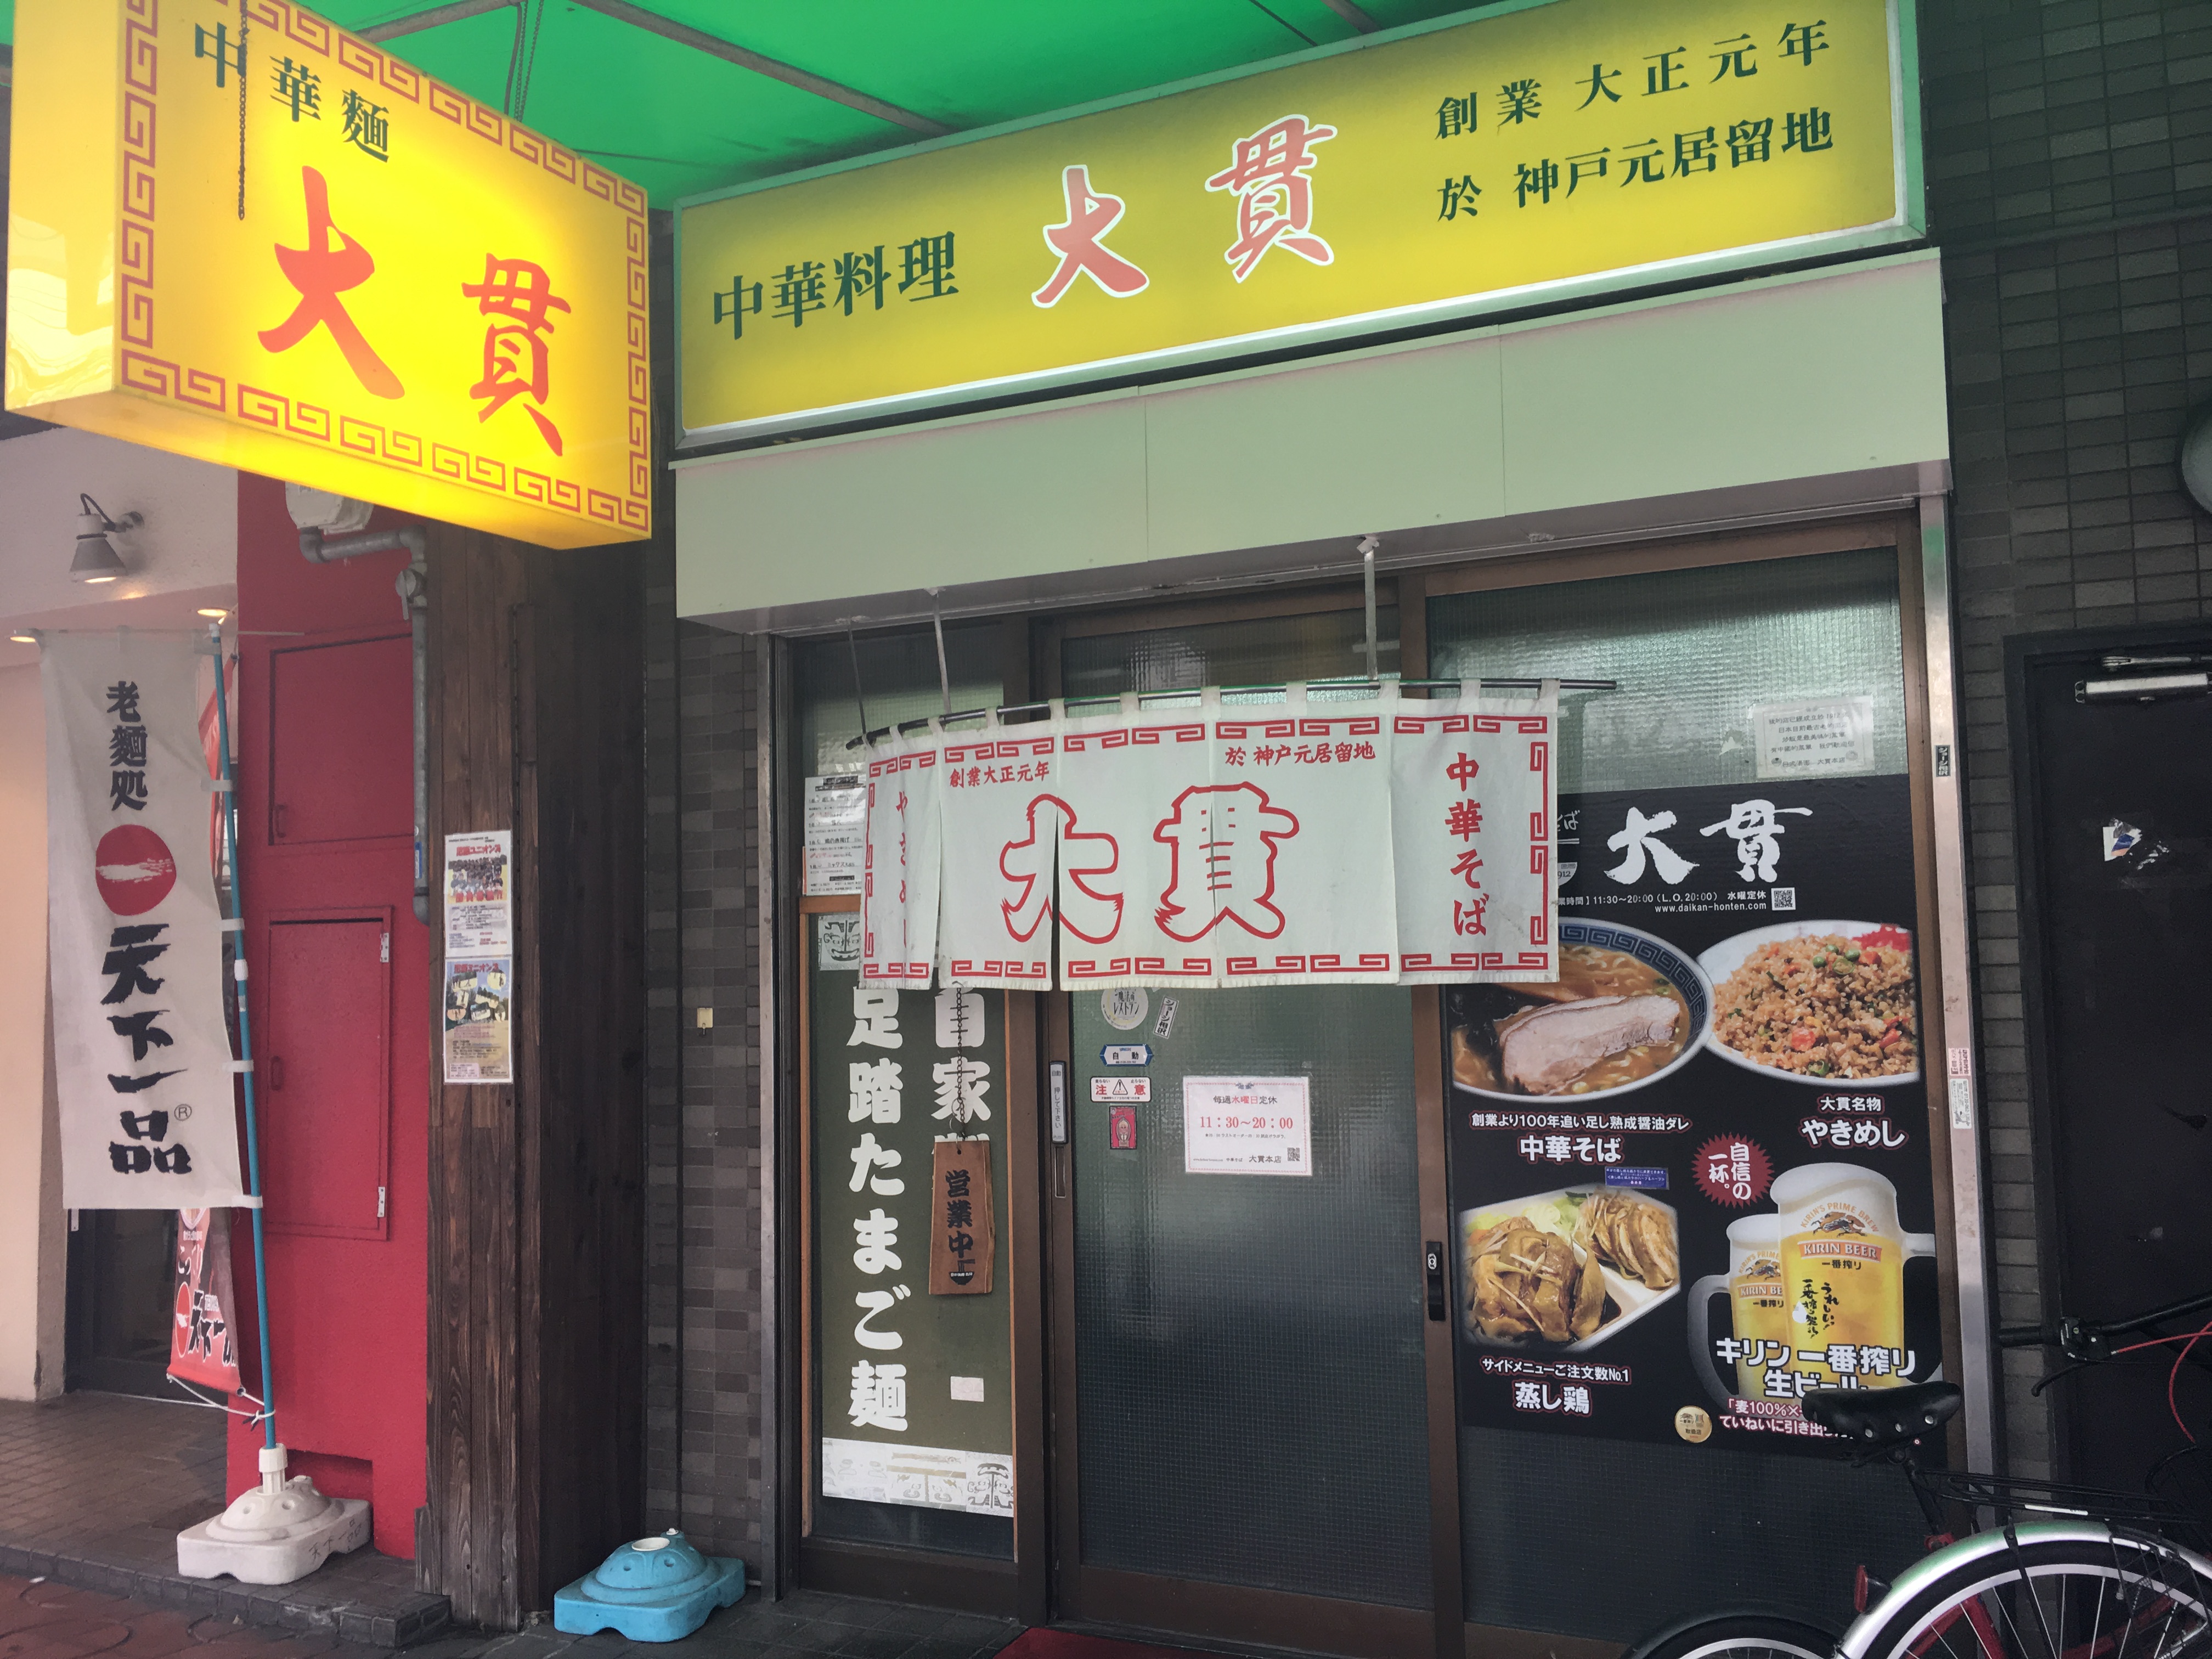 Entrance of Daikan ramen restaurant